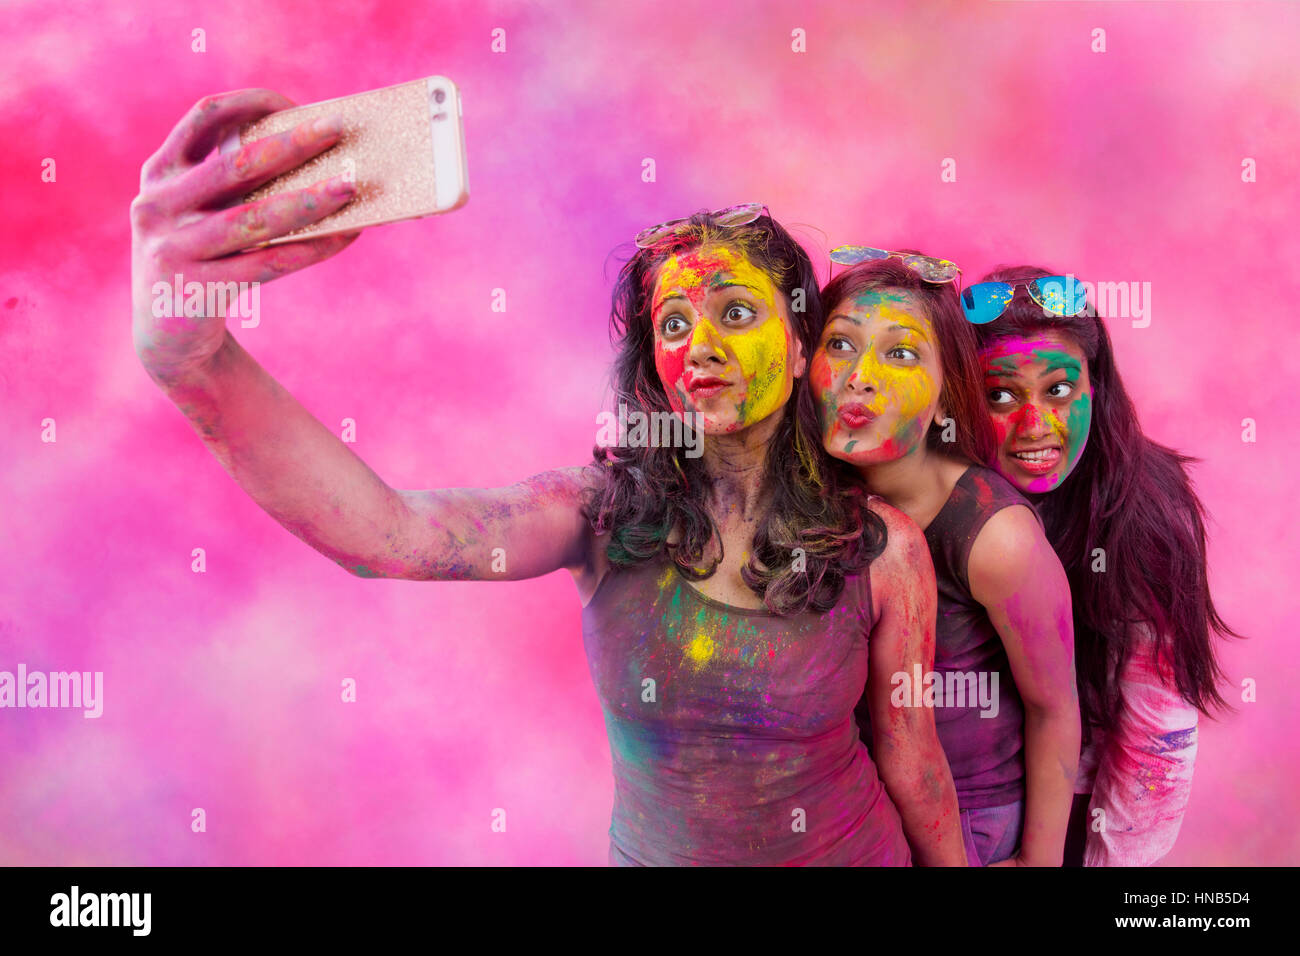 Portrait Happy Young Girl Festival Colors Holi Girl Posing Celebrating  Stock Photo by ©DipakShelare 371191696